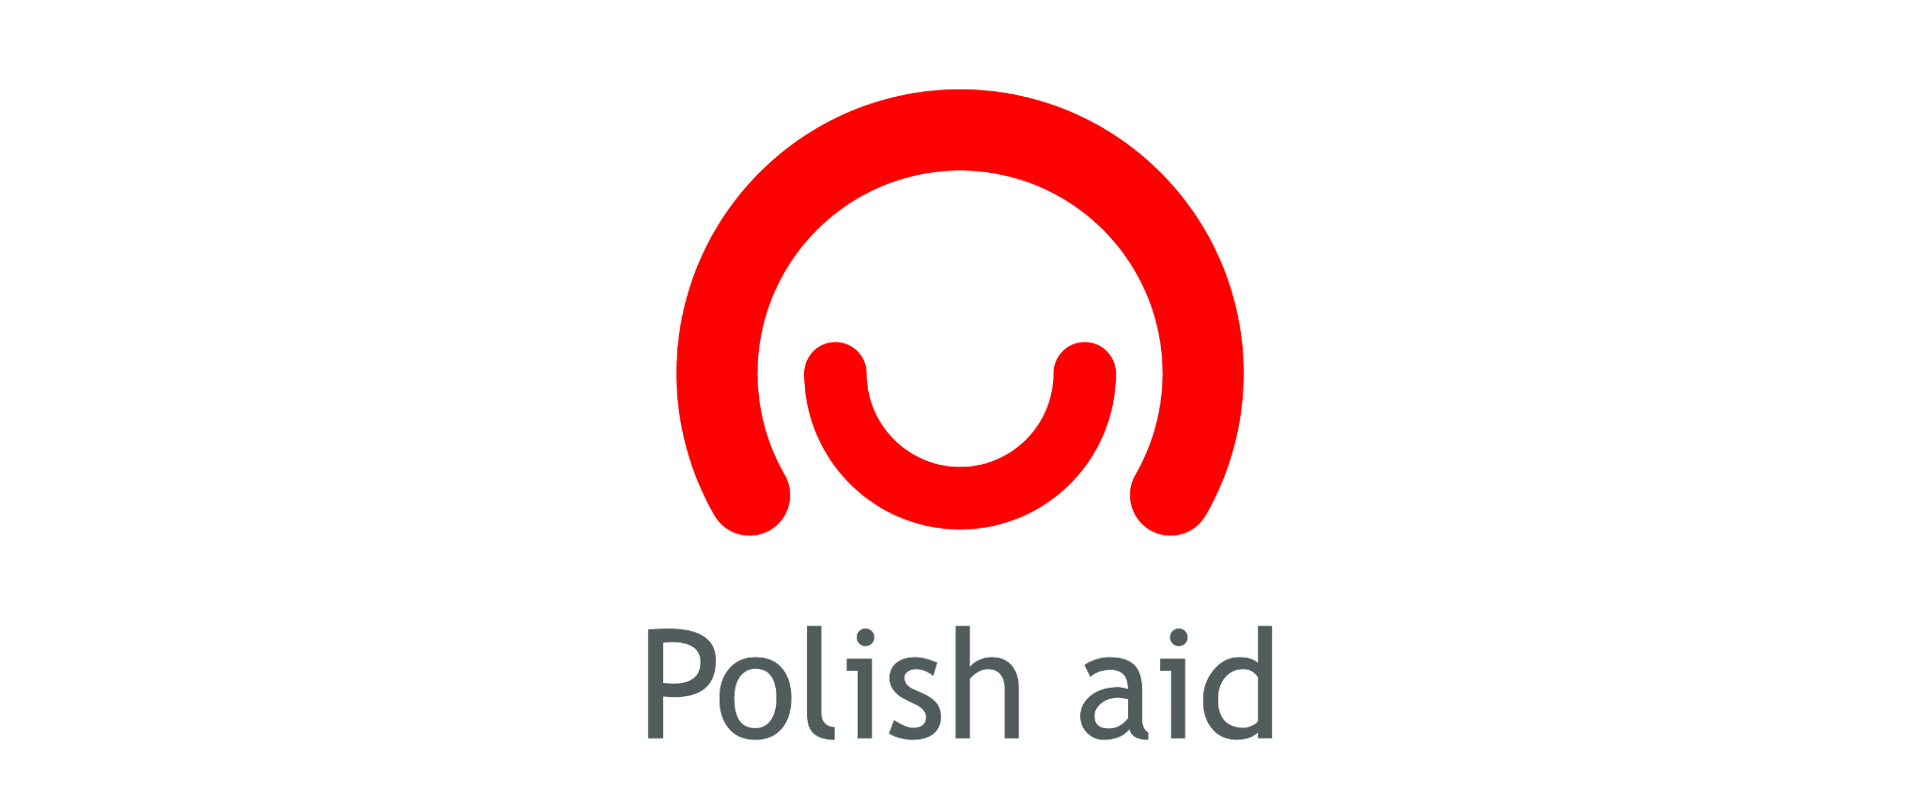 Polish aid logo